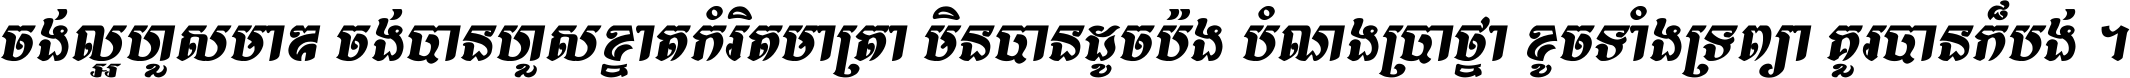 Kh Baphnom Limon F2A Italic